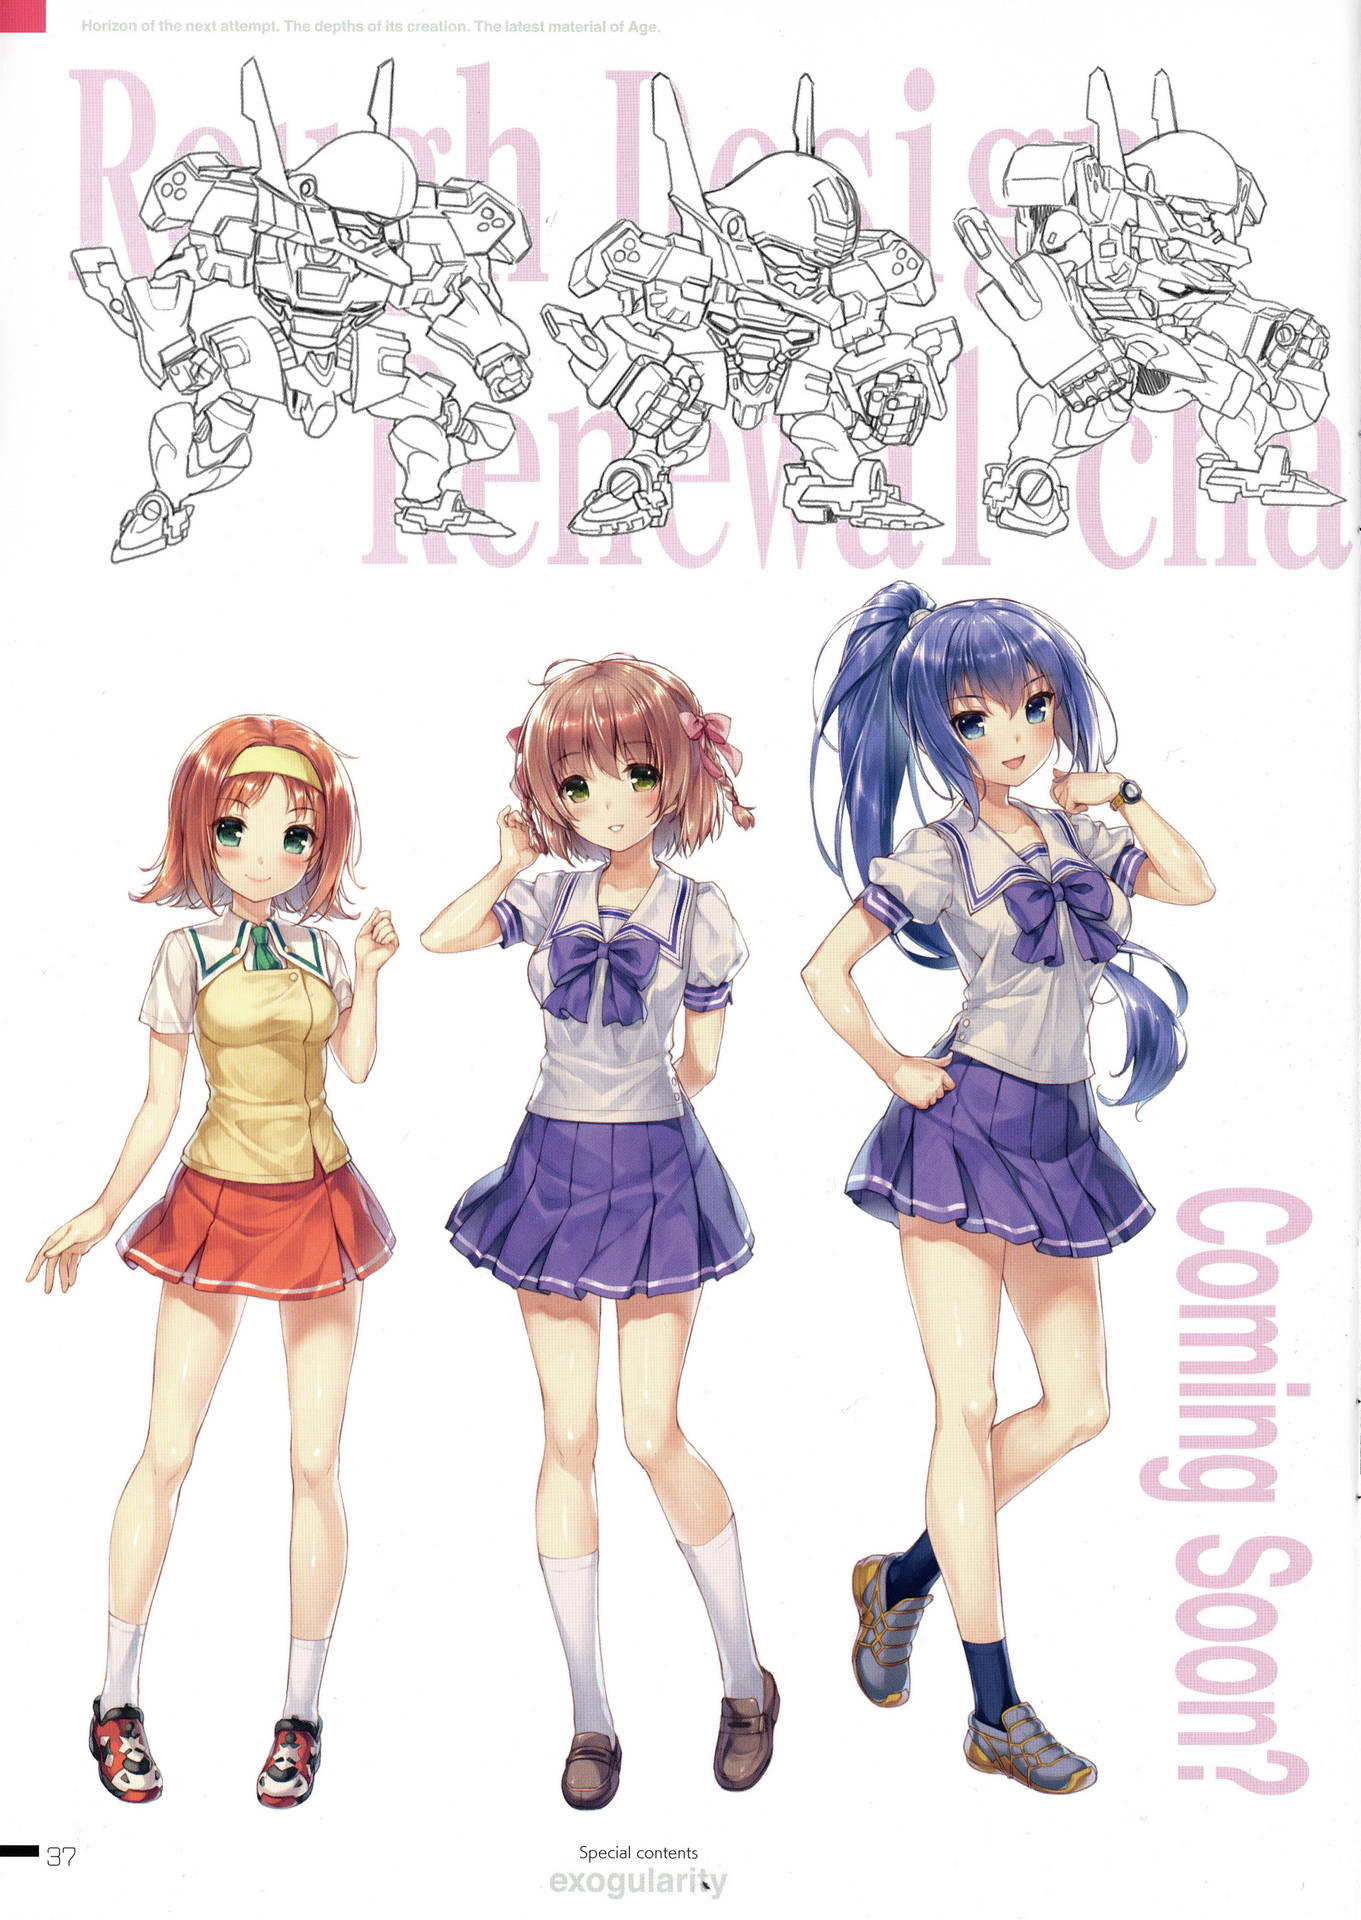 Caption: Main Characters of Kimi ga Nozomu Eien Anime Series Wallpaper